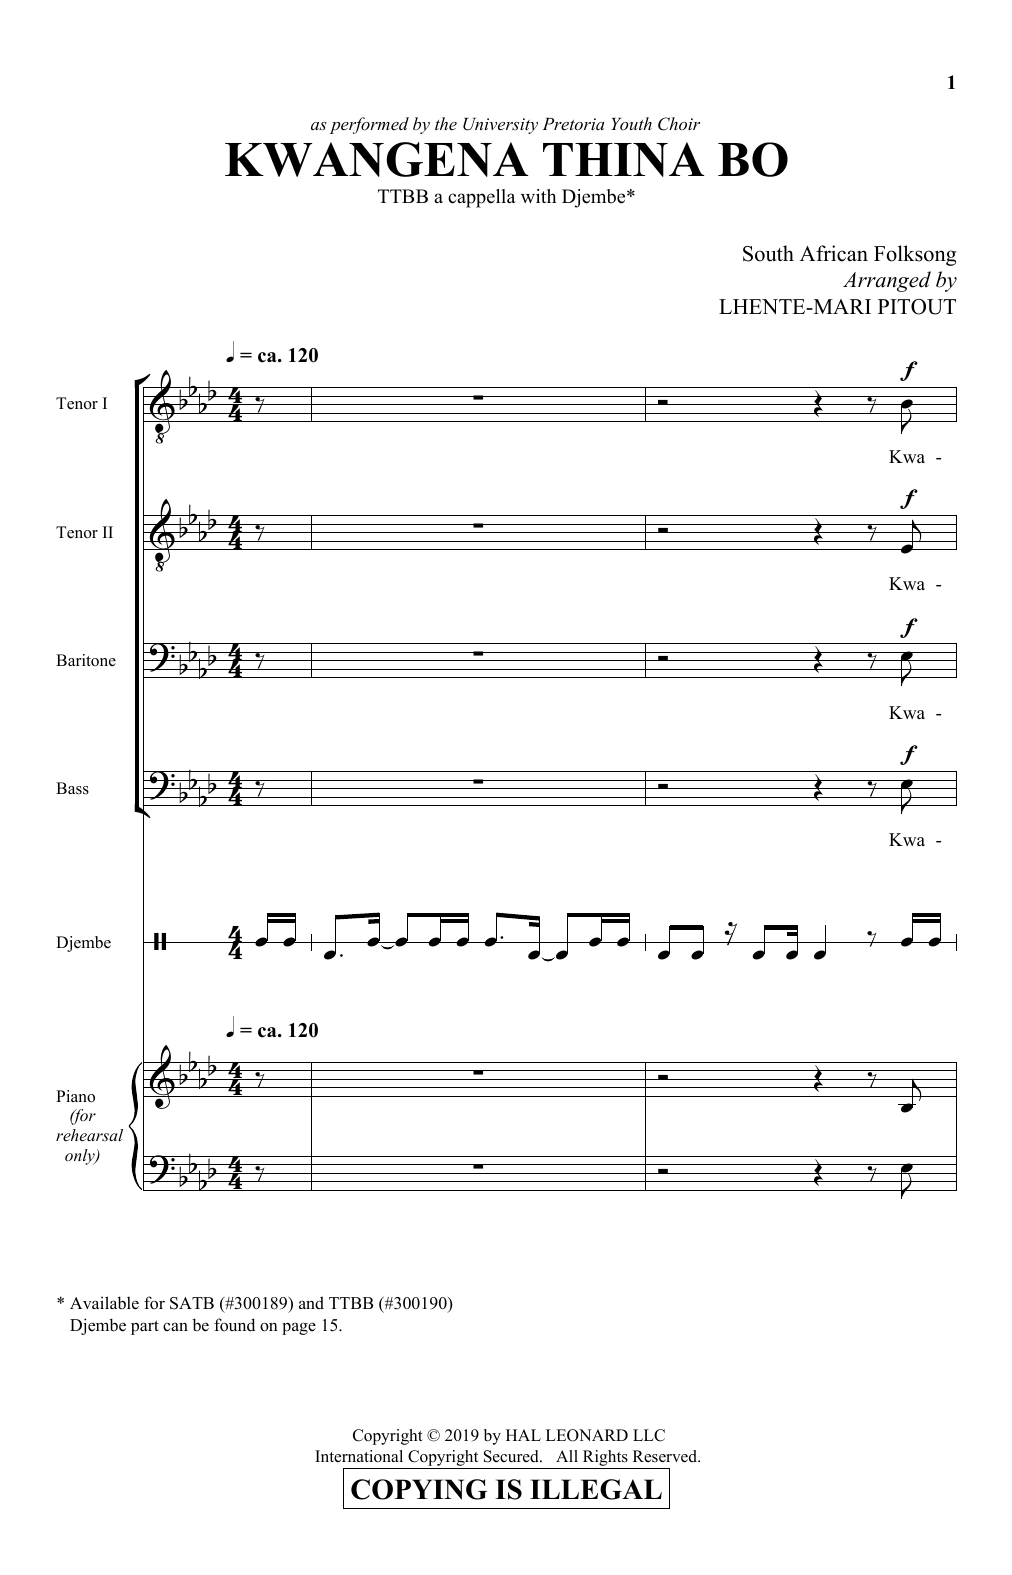 Traditional Xhosa Folk Song Kwangena Thina Bo (arr. Lhente-Mari Pitout) Sheet Music Notes & Chords for TTBB Choir - Download or Print PDF